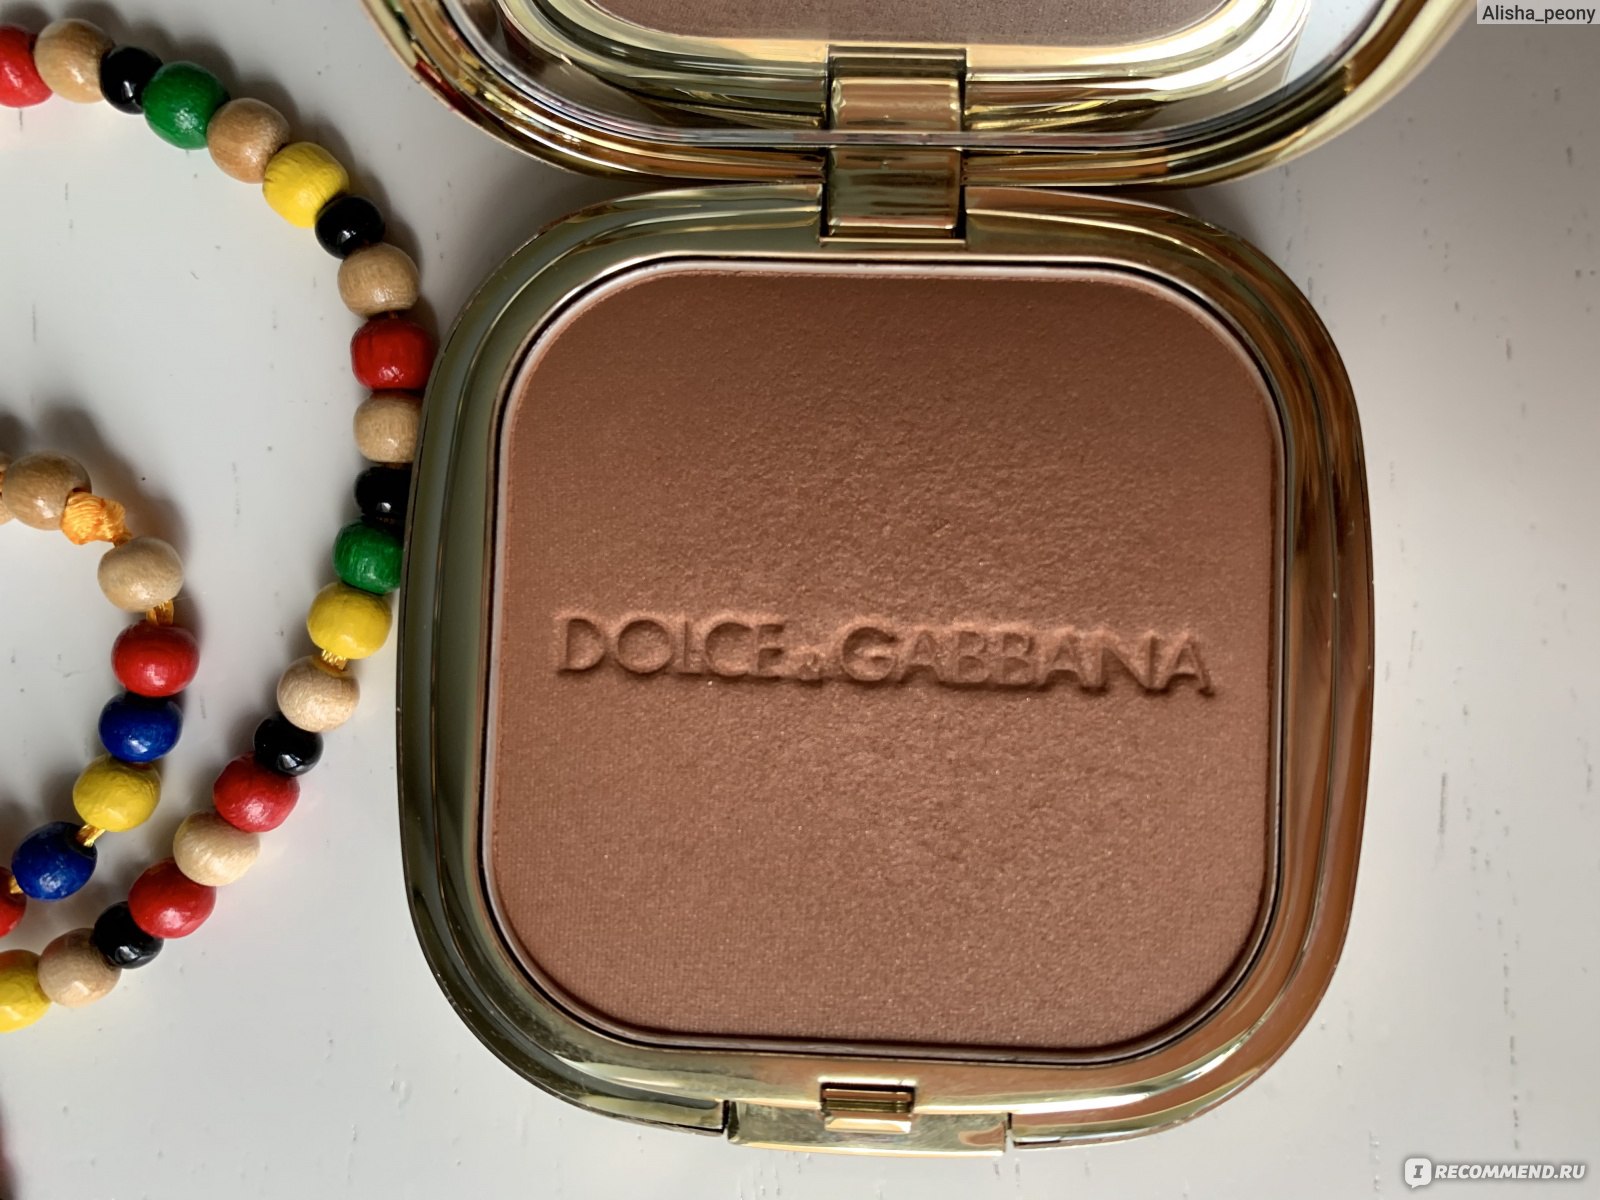 Хайлайтер дольче габбана. Dolce Gabbana бронзер. Бронзирующая пудра Solar Glow, Dolce Gabbana. Дольче Габбана Солар Глоу бронзер. Dolce Gabbana Solar Glow пудра.